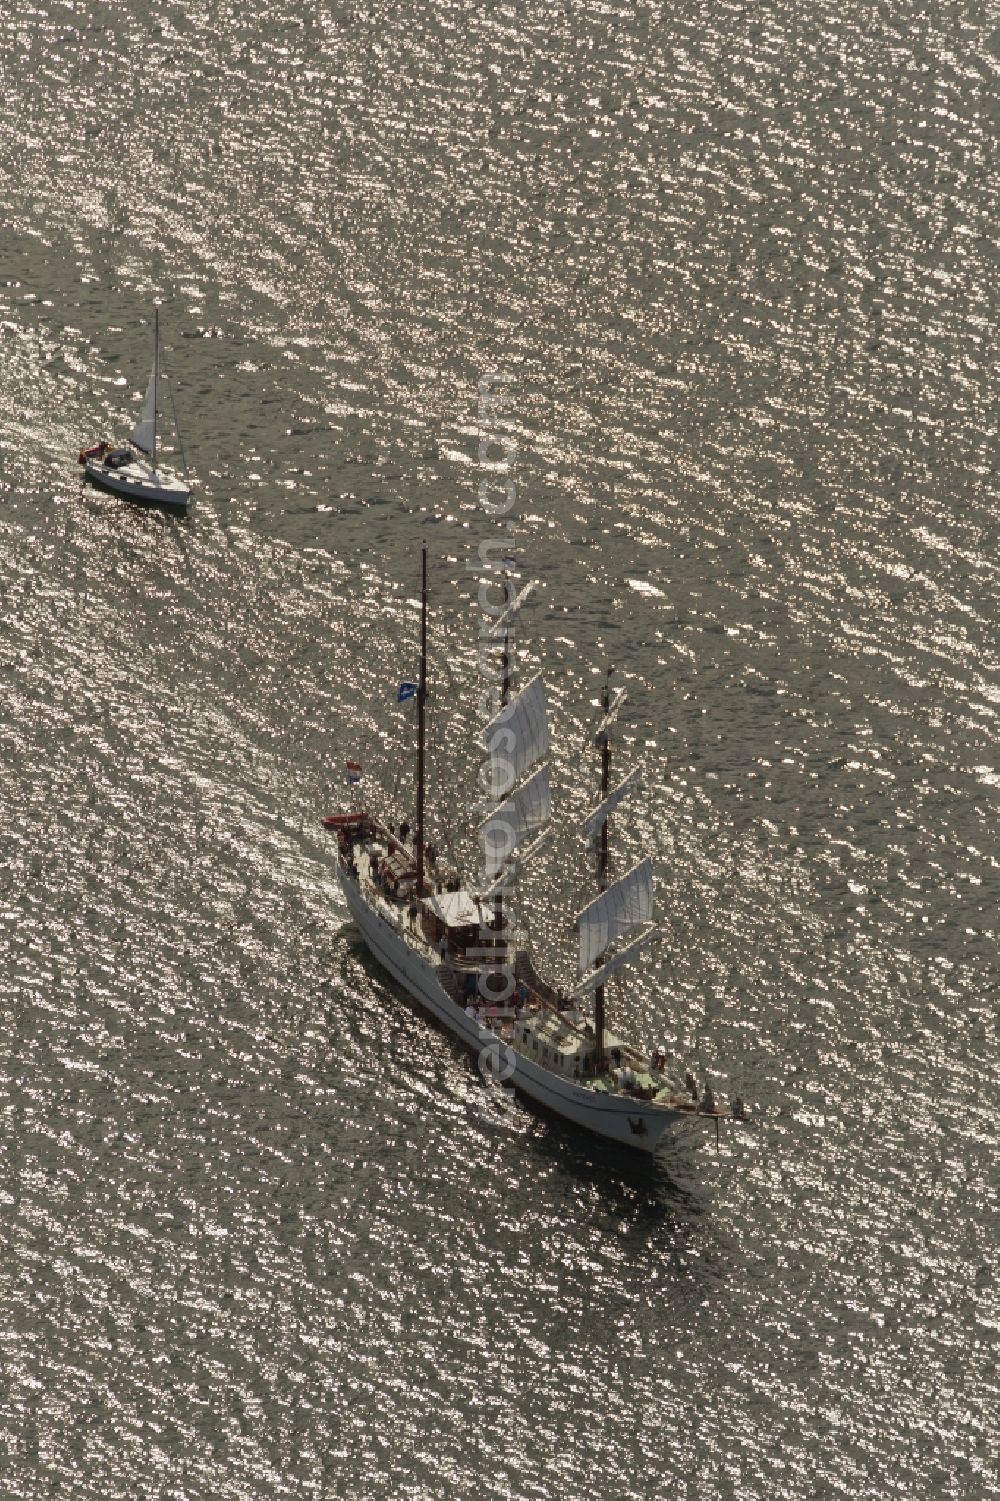 Aerial image Rostock Warnemünde - Sailboats on the Hans Sail on the Baltic Sea - Coast of Warnemünde in Rostock in Mecklenburg-Western Pomerania